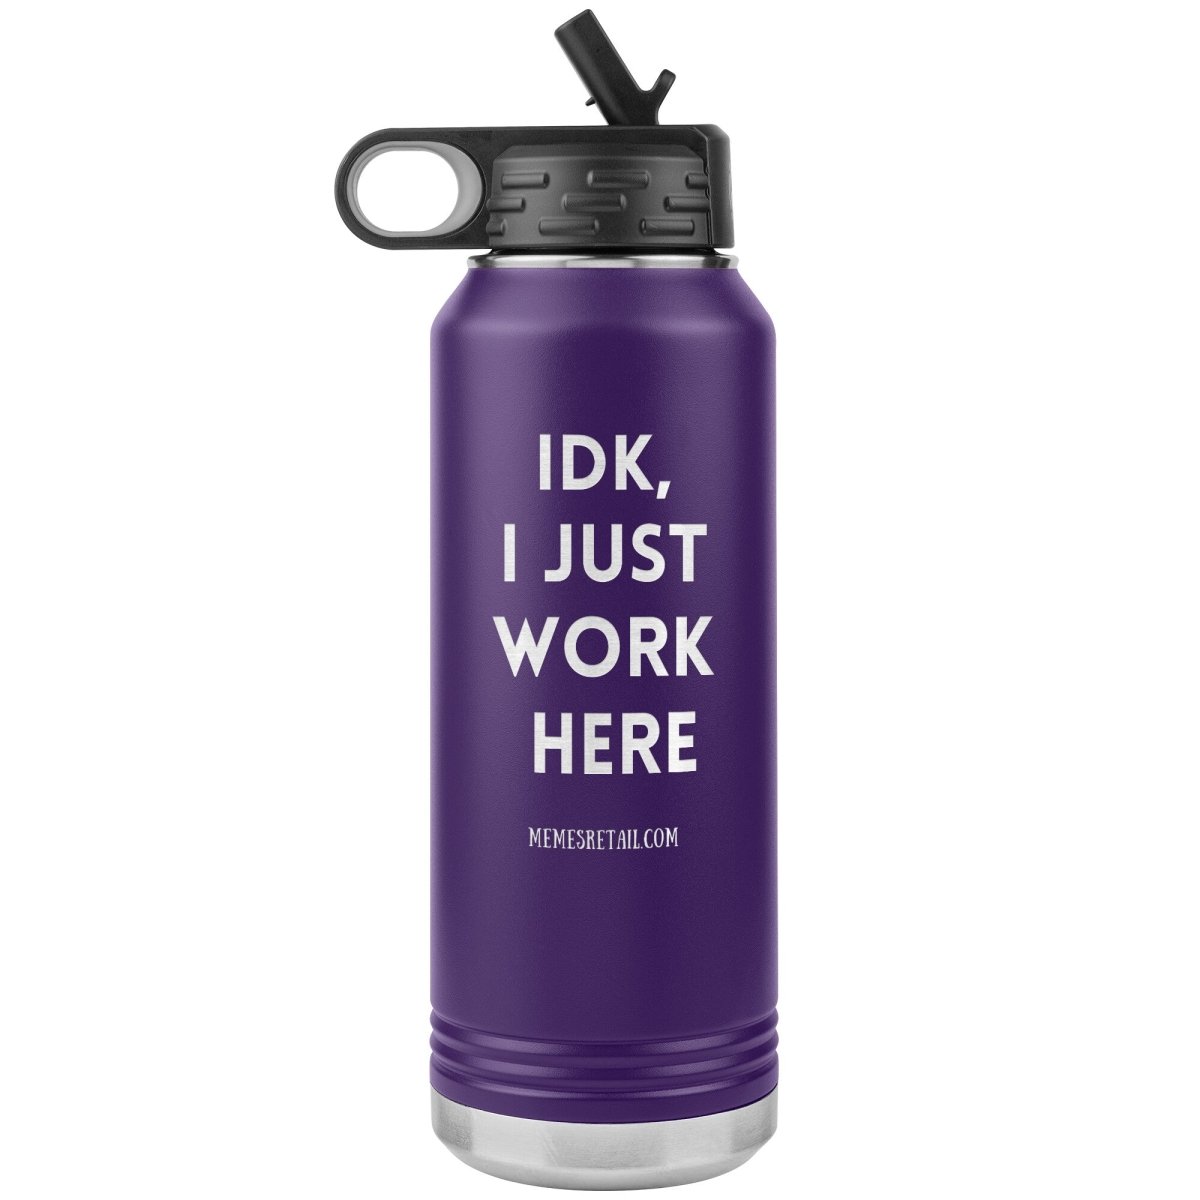 IDK, I Just Work Here 32 oz Stainless Steel Water Bottle Tumbler, Purple - MemesRetail.com